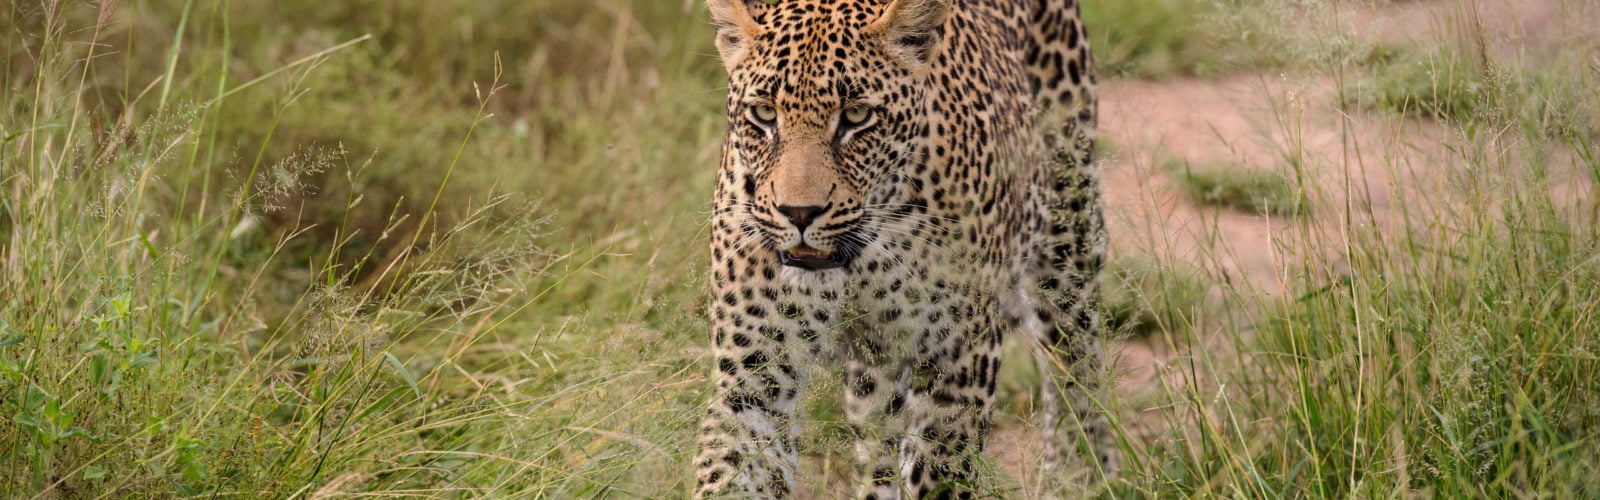 leopard-sabi-sands-south-africa